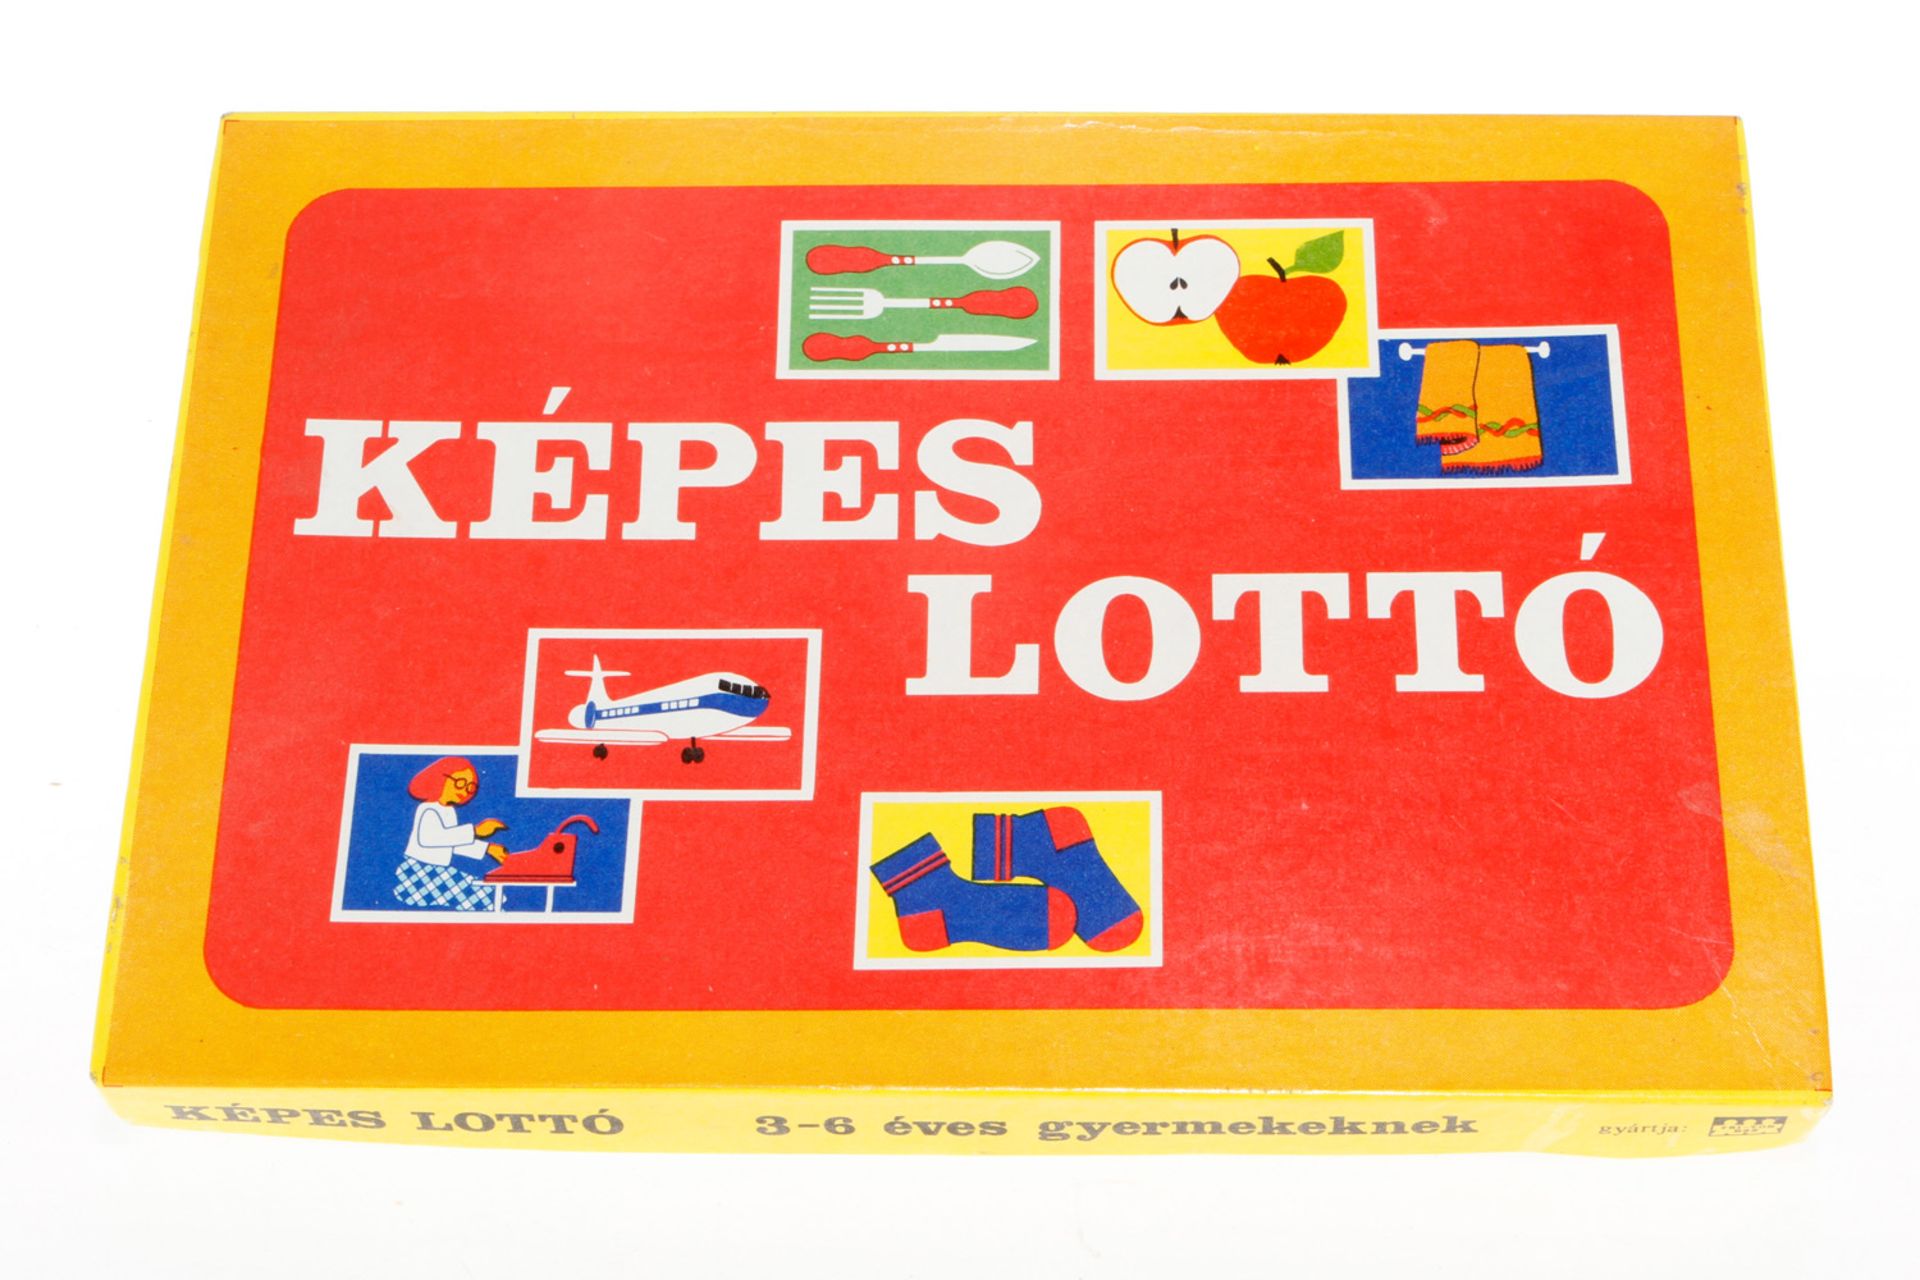 Spiel "Lotto", wohl komplett